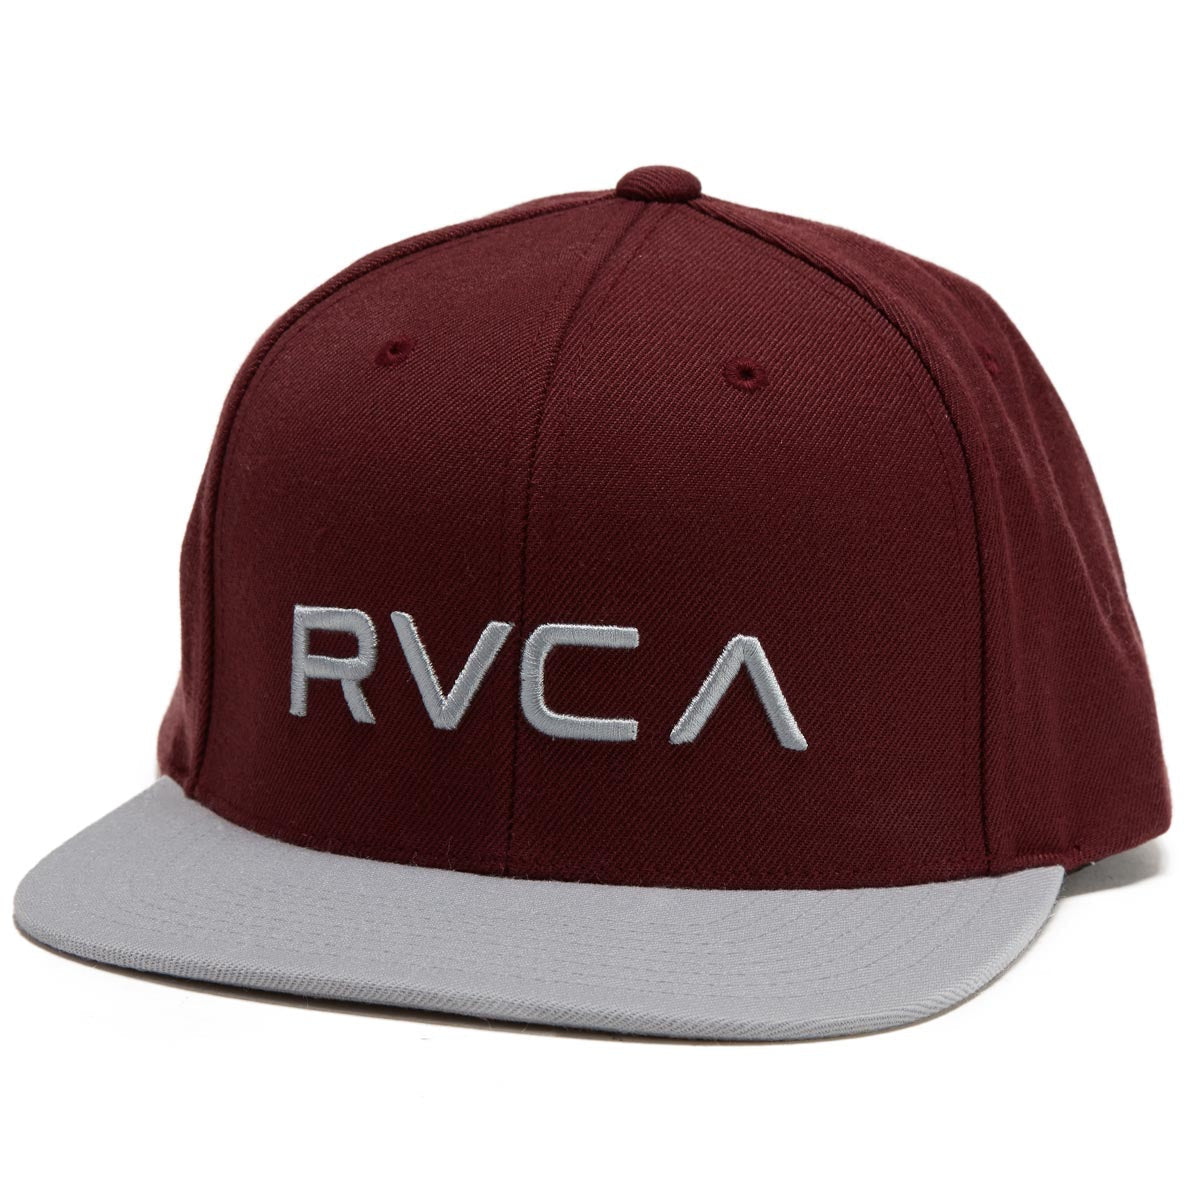 RVCA Twill Snapback II Hat - Wine image 1